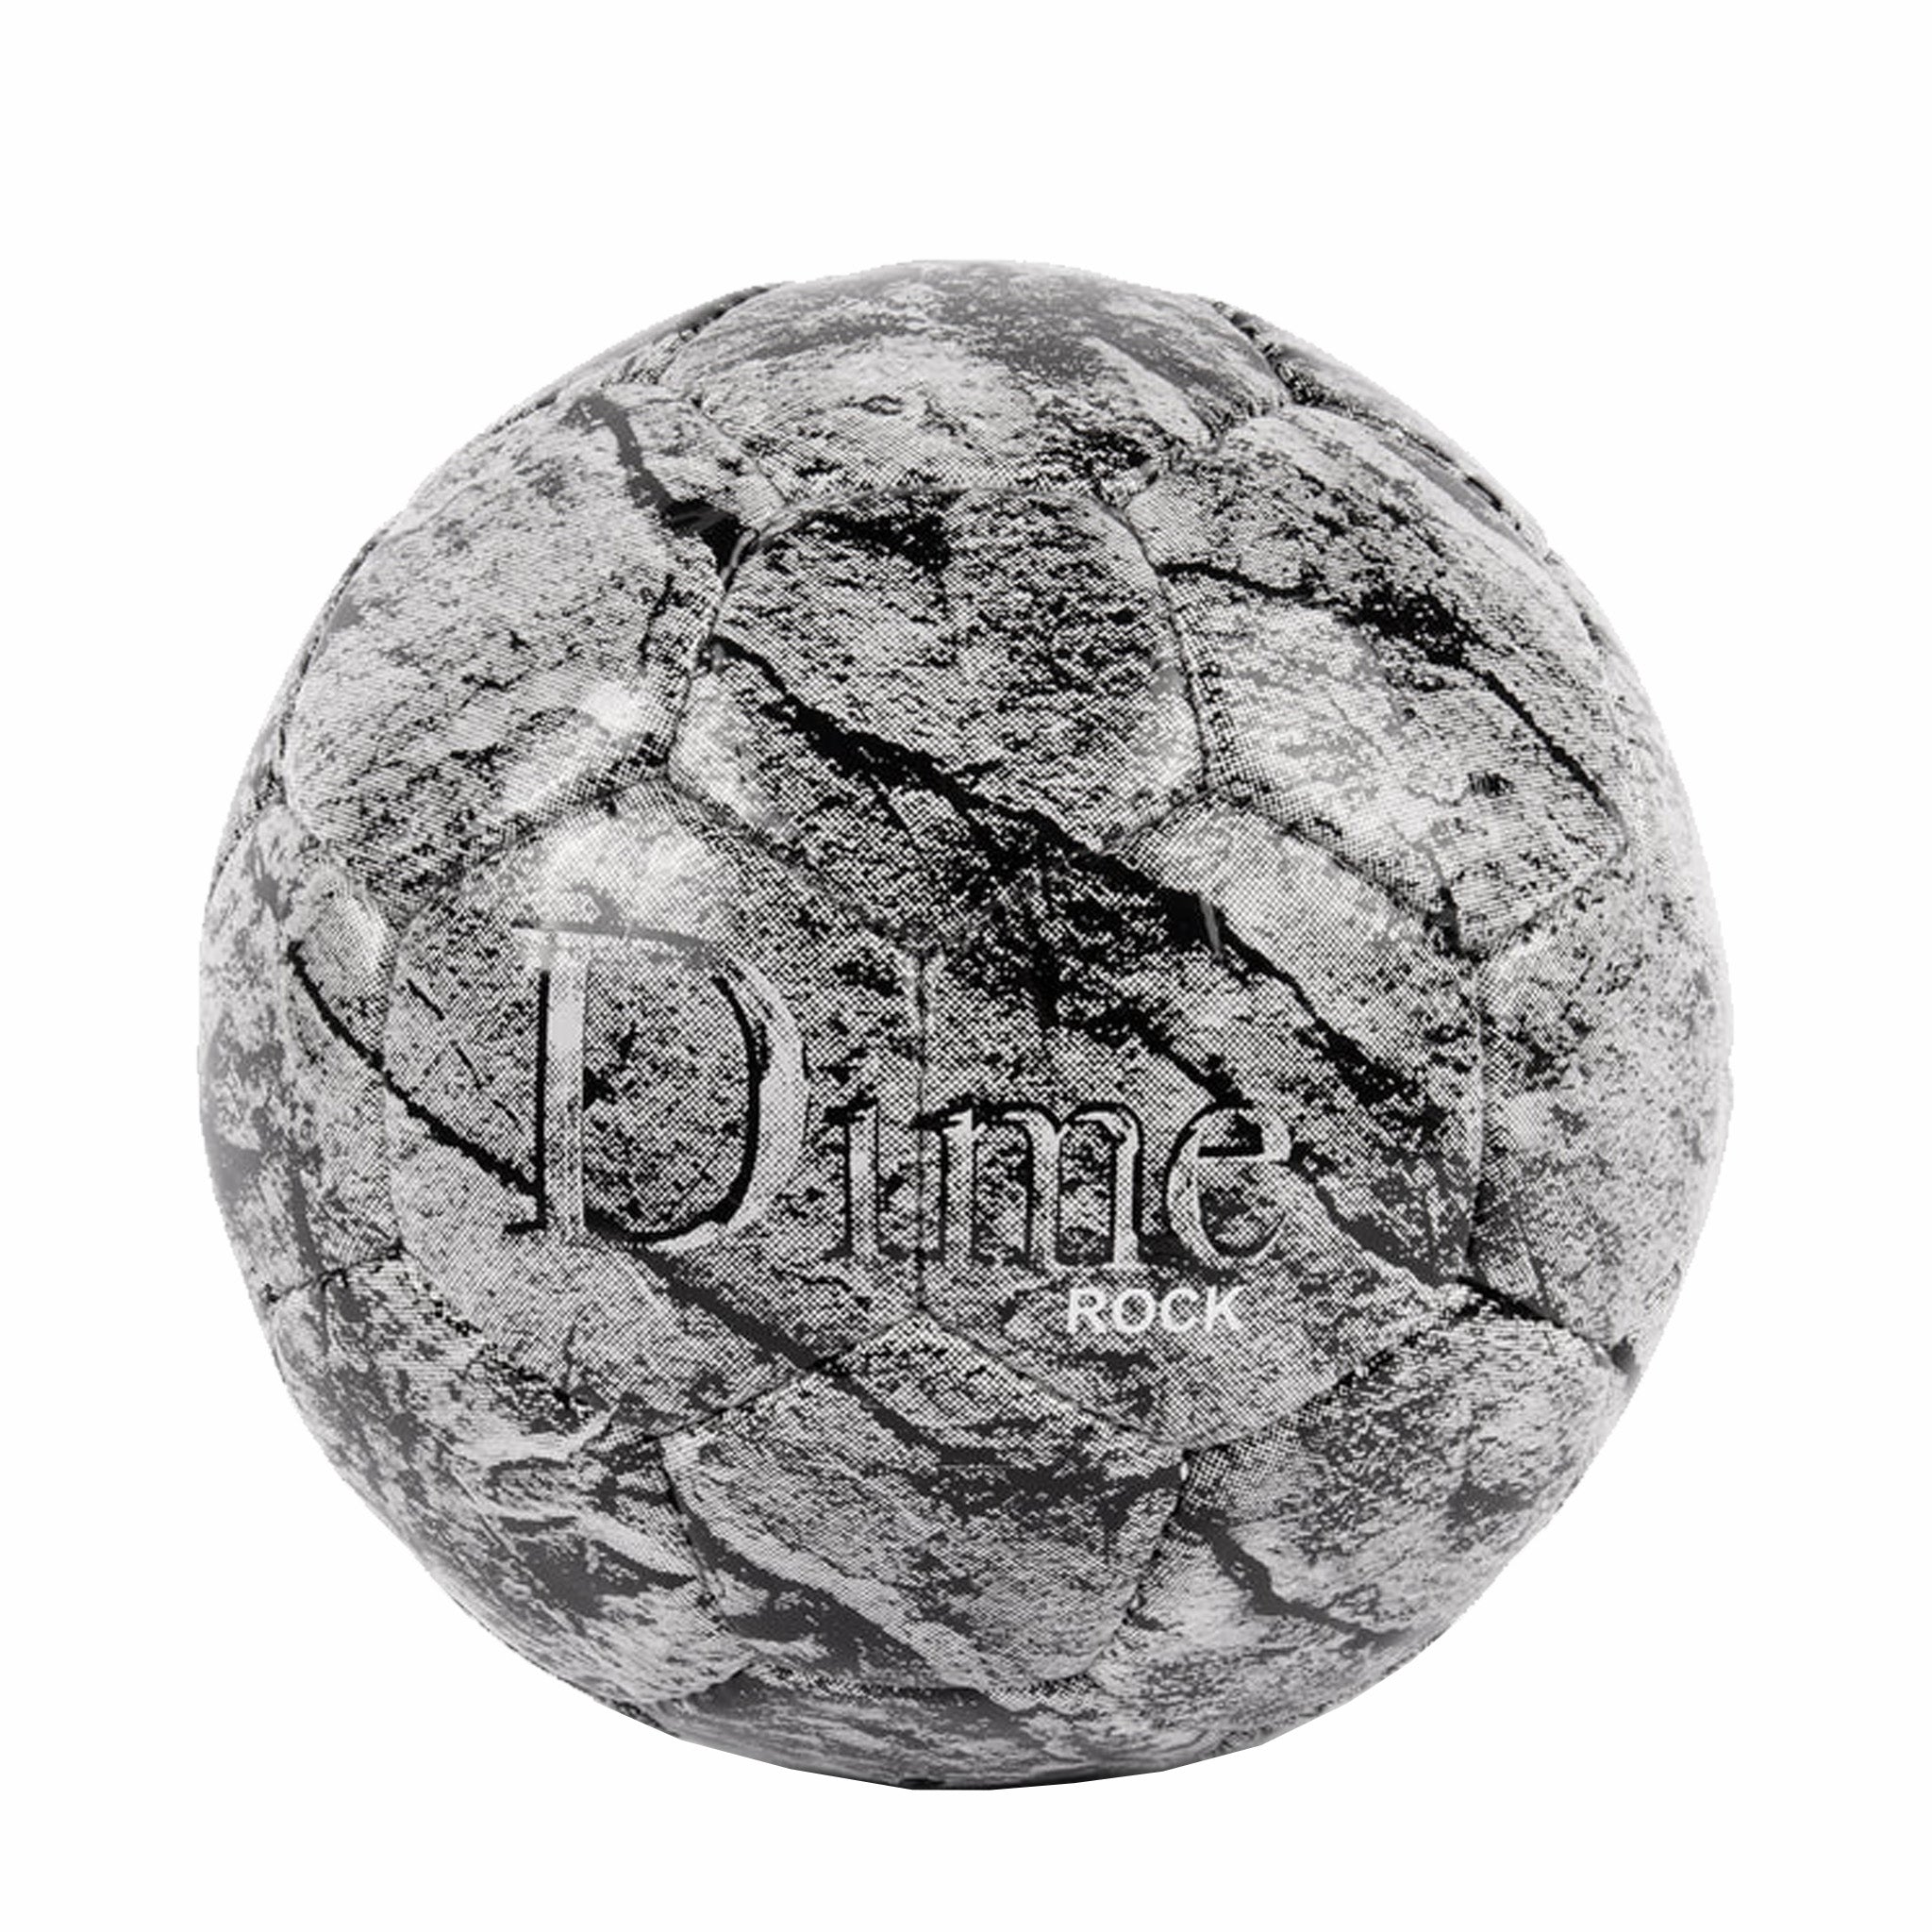 Dime Rock Soccer Ball	(Stone Gray) - August Shop